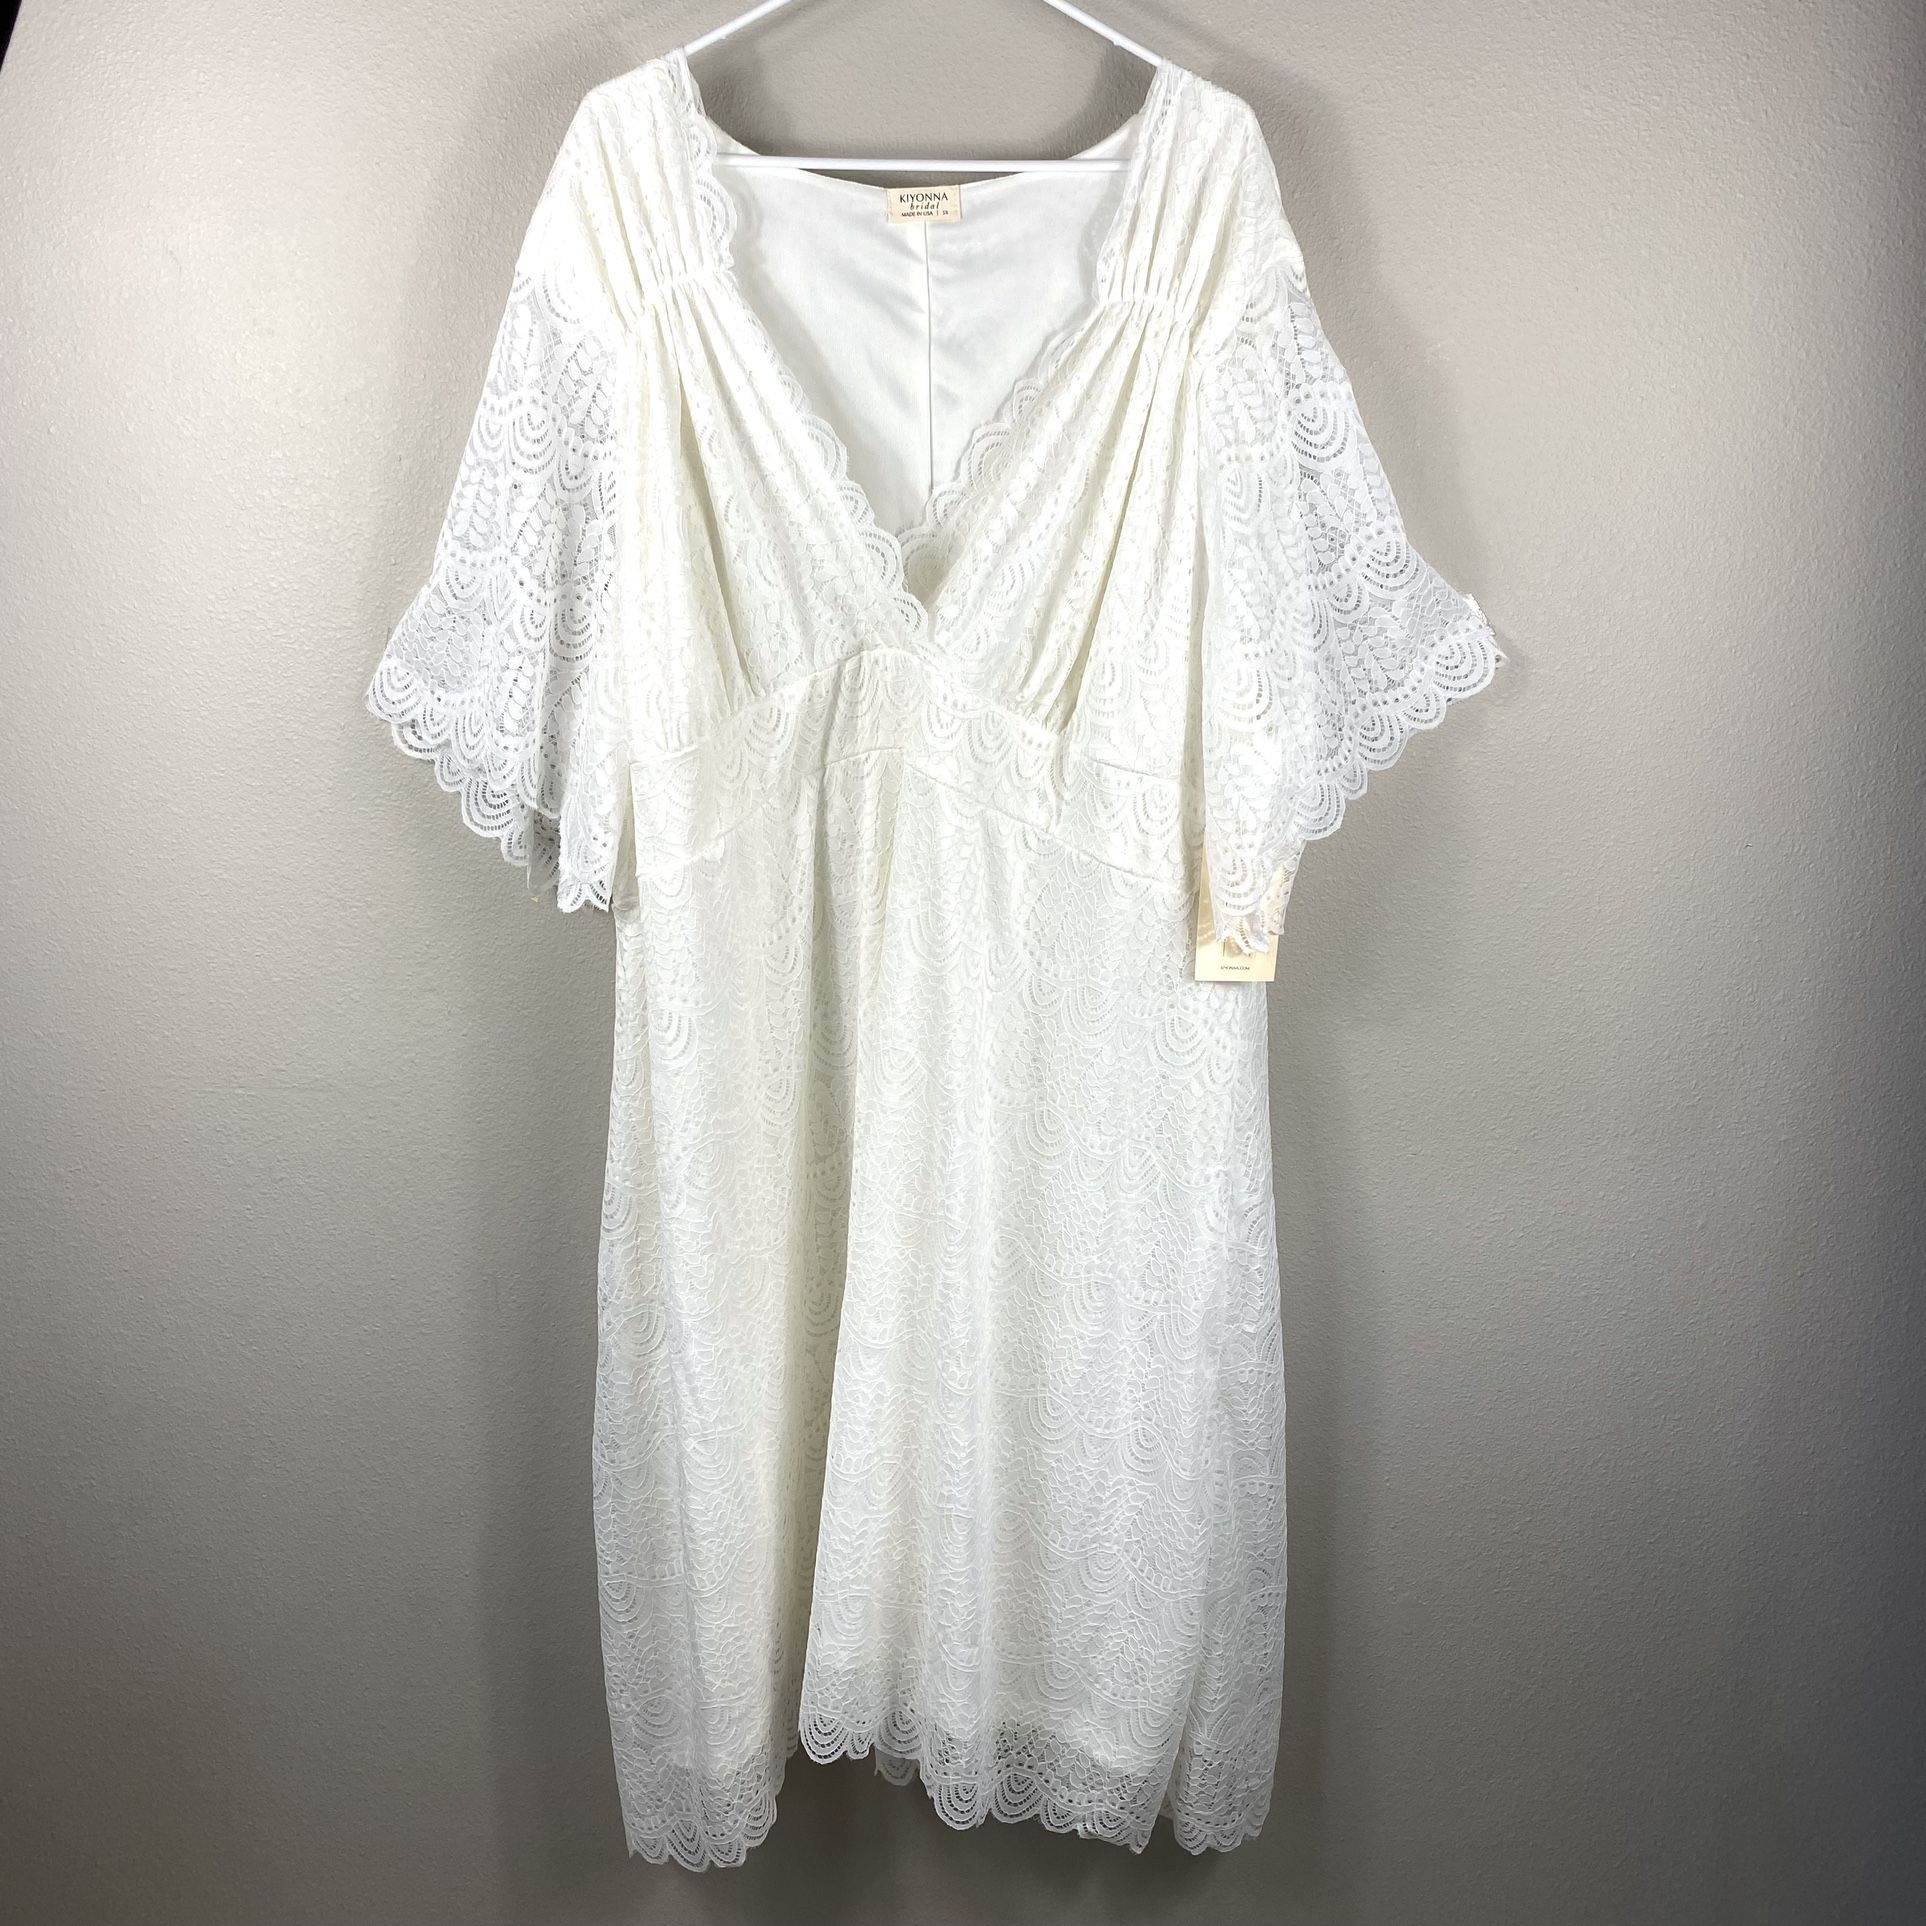 Kiyonna Bridal Ivory Wedding Dress Plus Size 5x Lace New